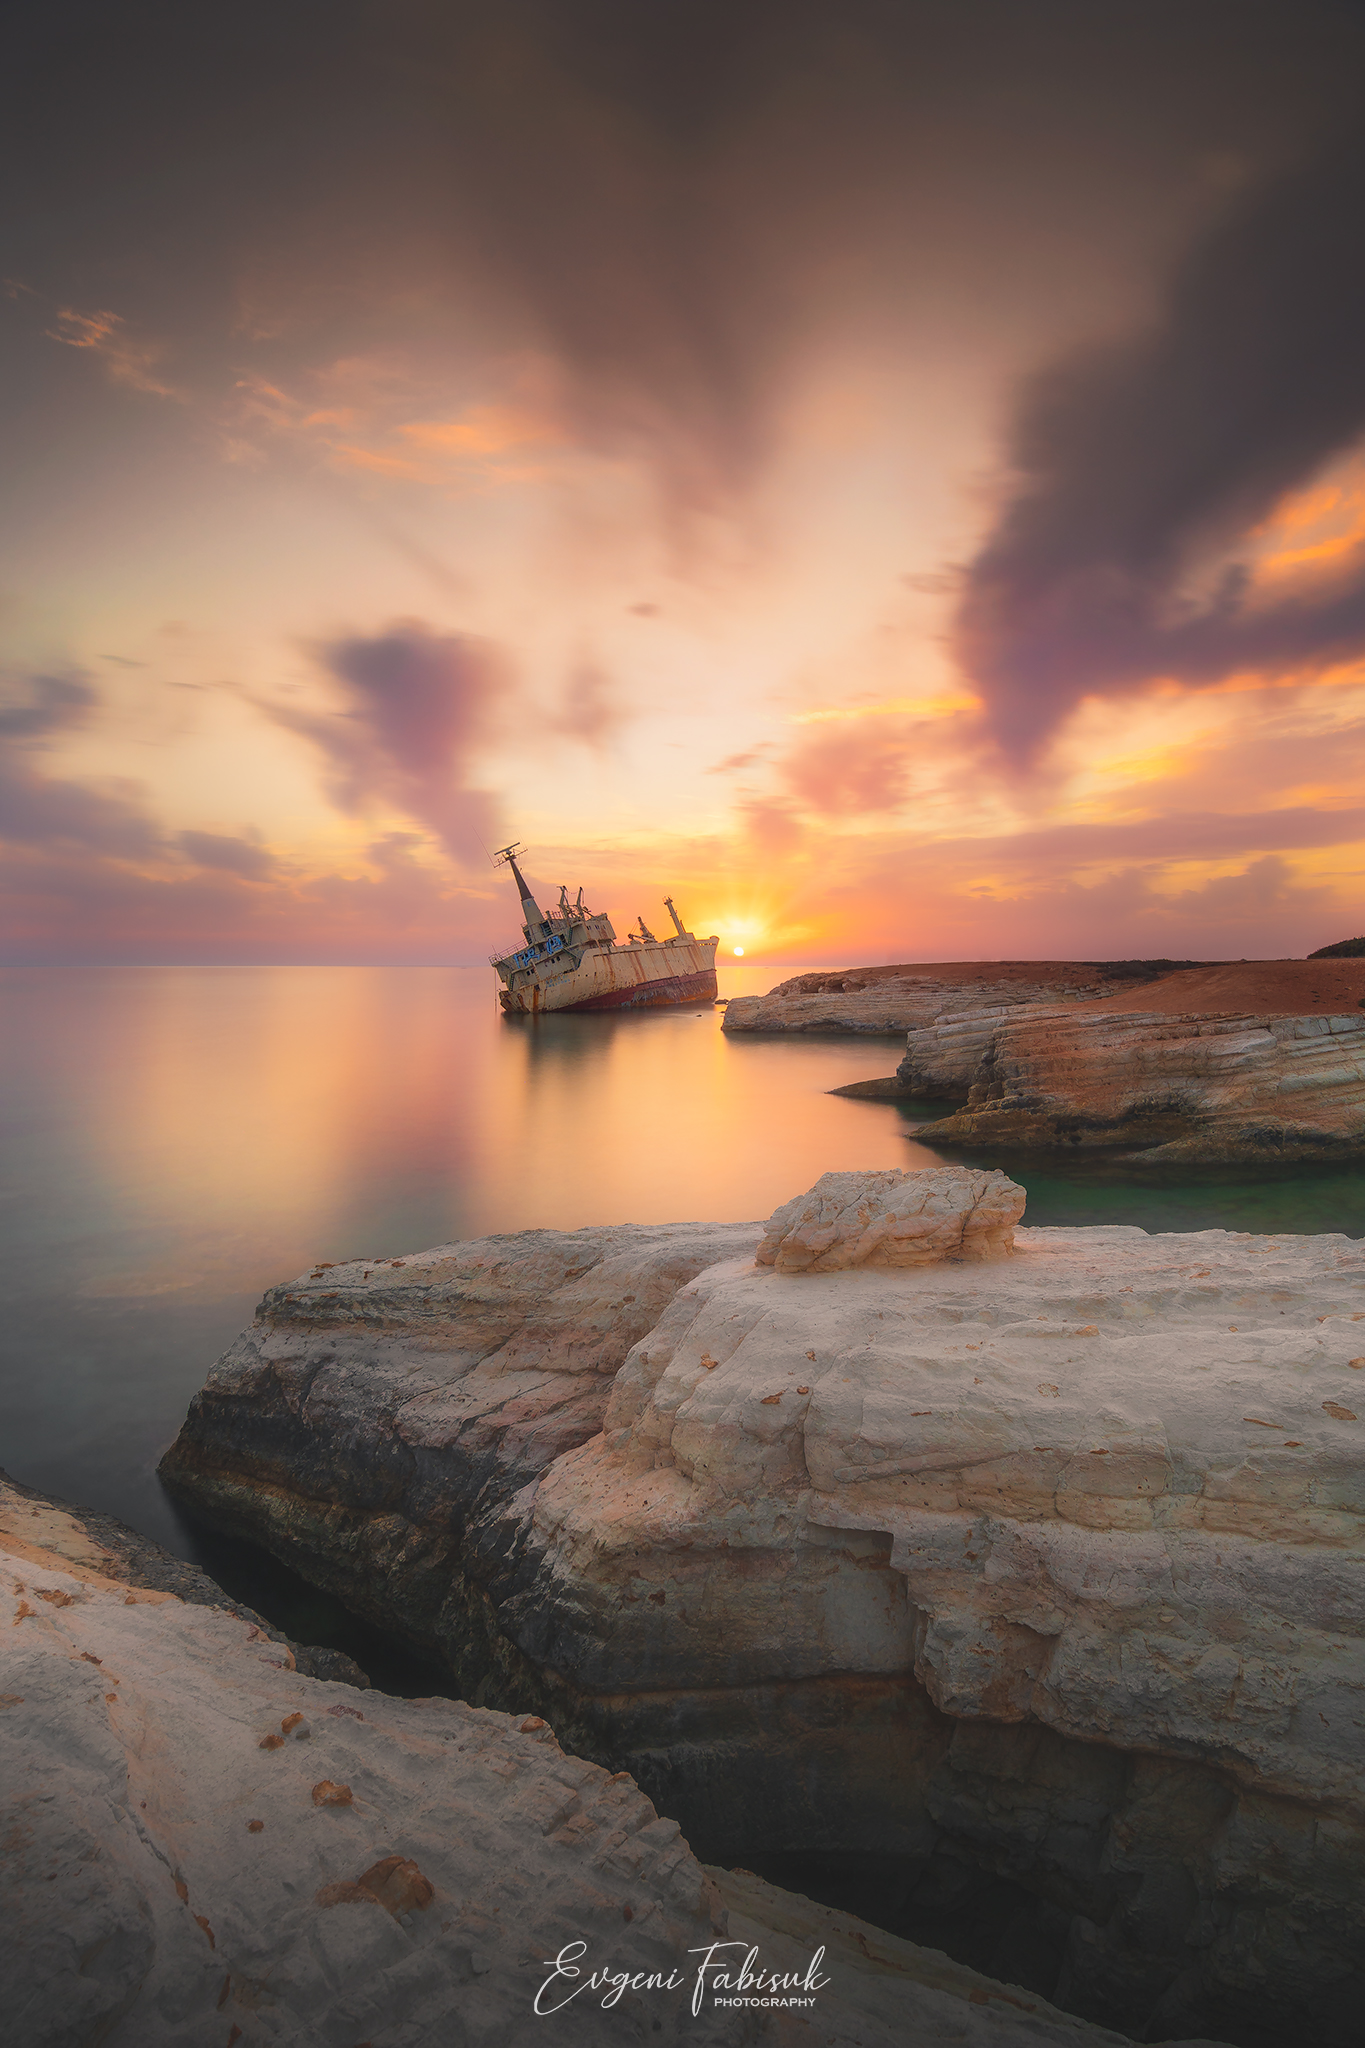 General 1365x2048 nature landscape portrait display shipwreck Evgeni Fabisuk rocks cliff Sun clouds Cyprus sea